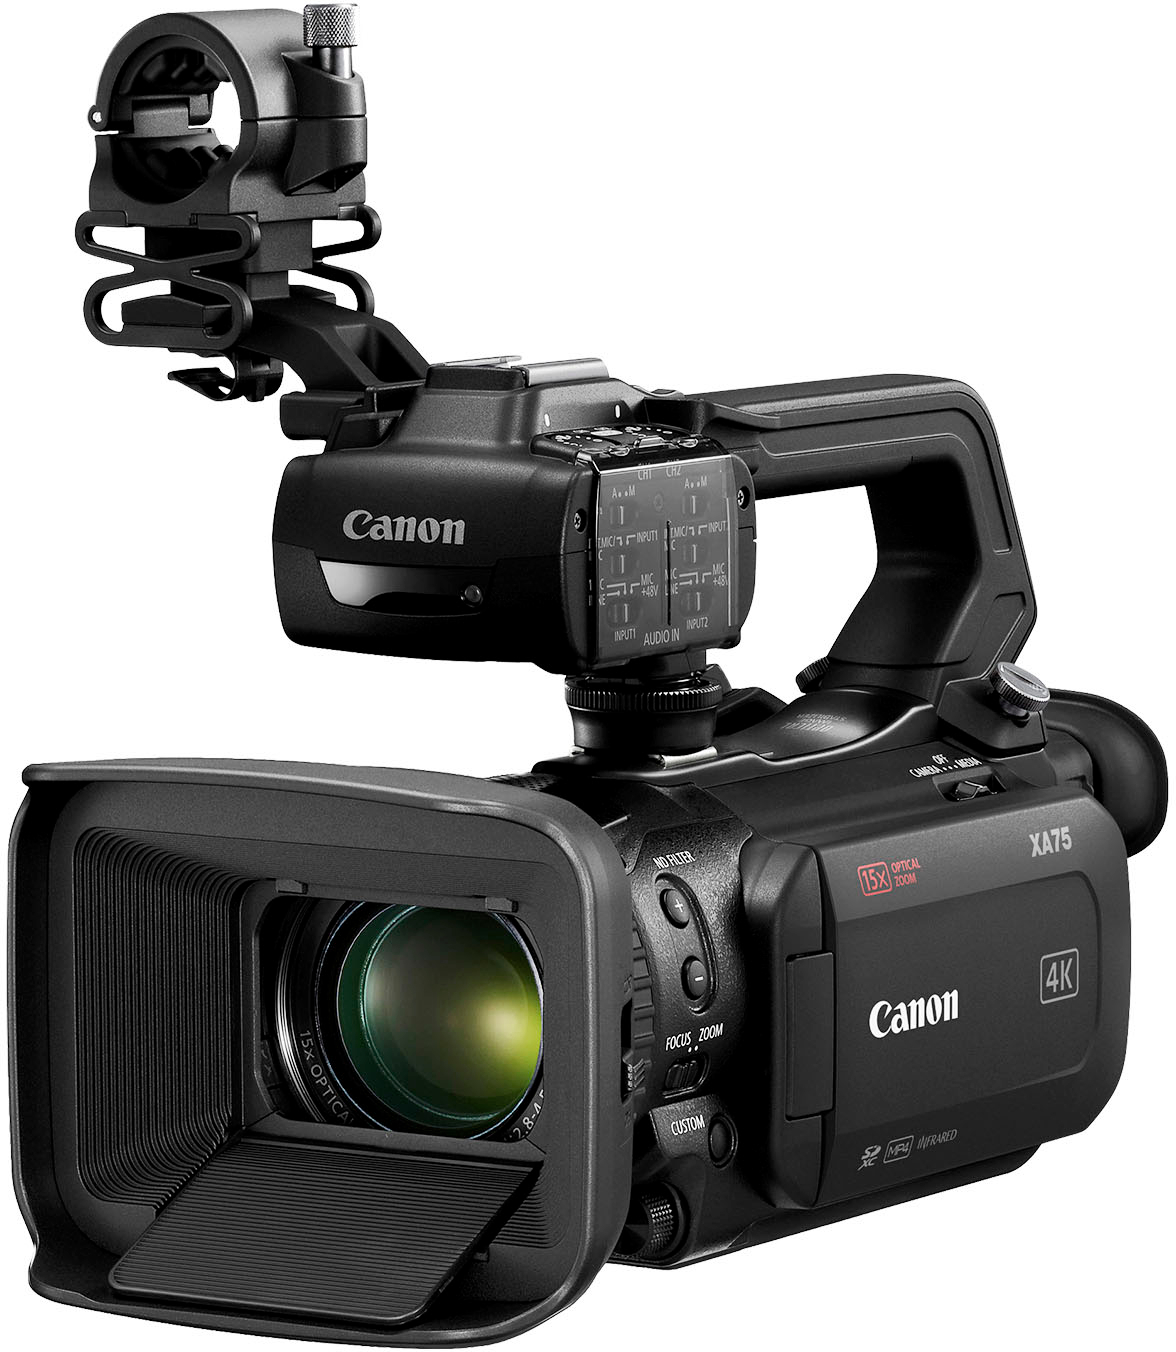 Angle View: Canon - XA75 Professional Camcorder - Black